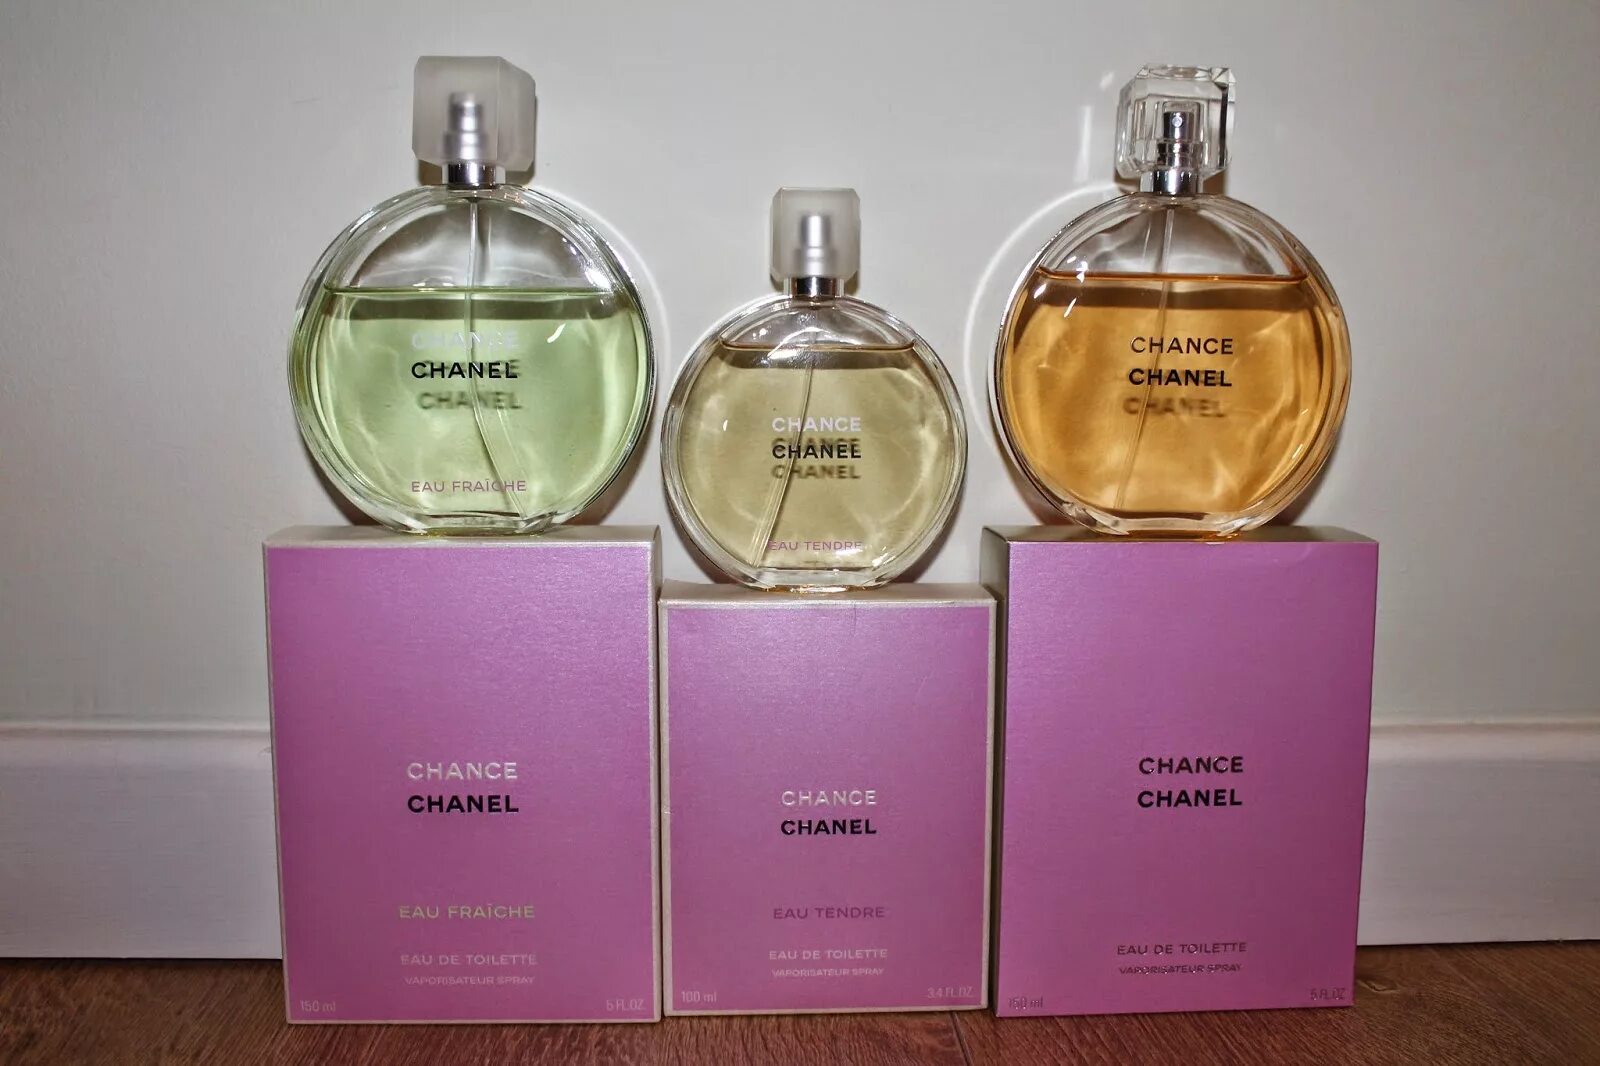 Chanel tendre оригинал. Chanel chance Eau Vive. Chanel Eau Vive 50ml. Chanel chance vs Chanel tendre. Chanel Eau Vive.